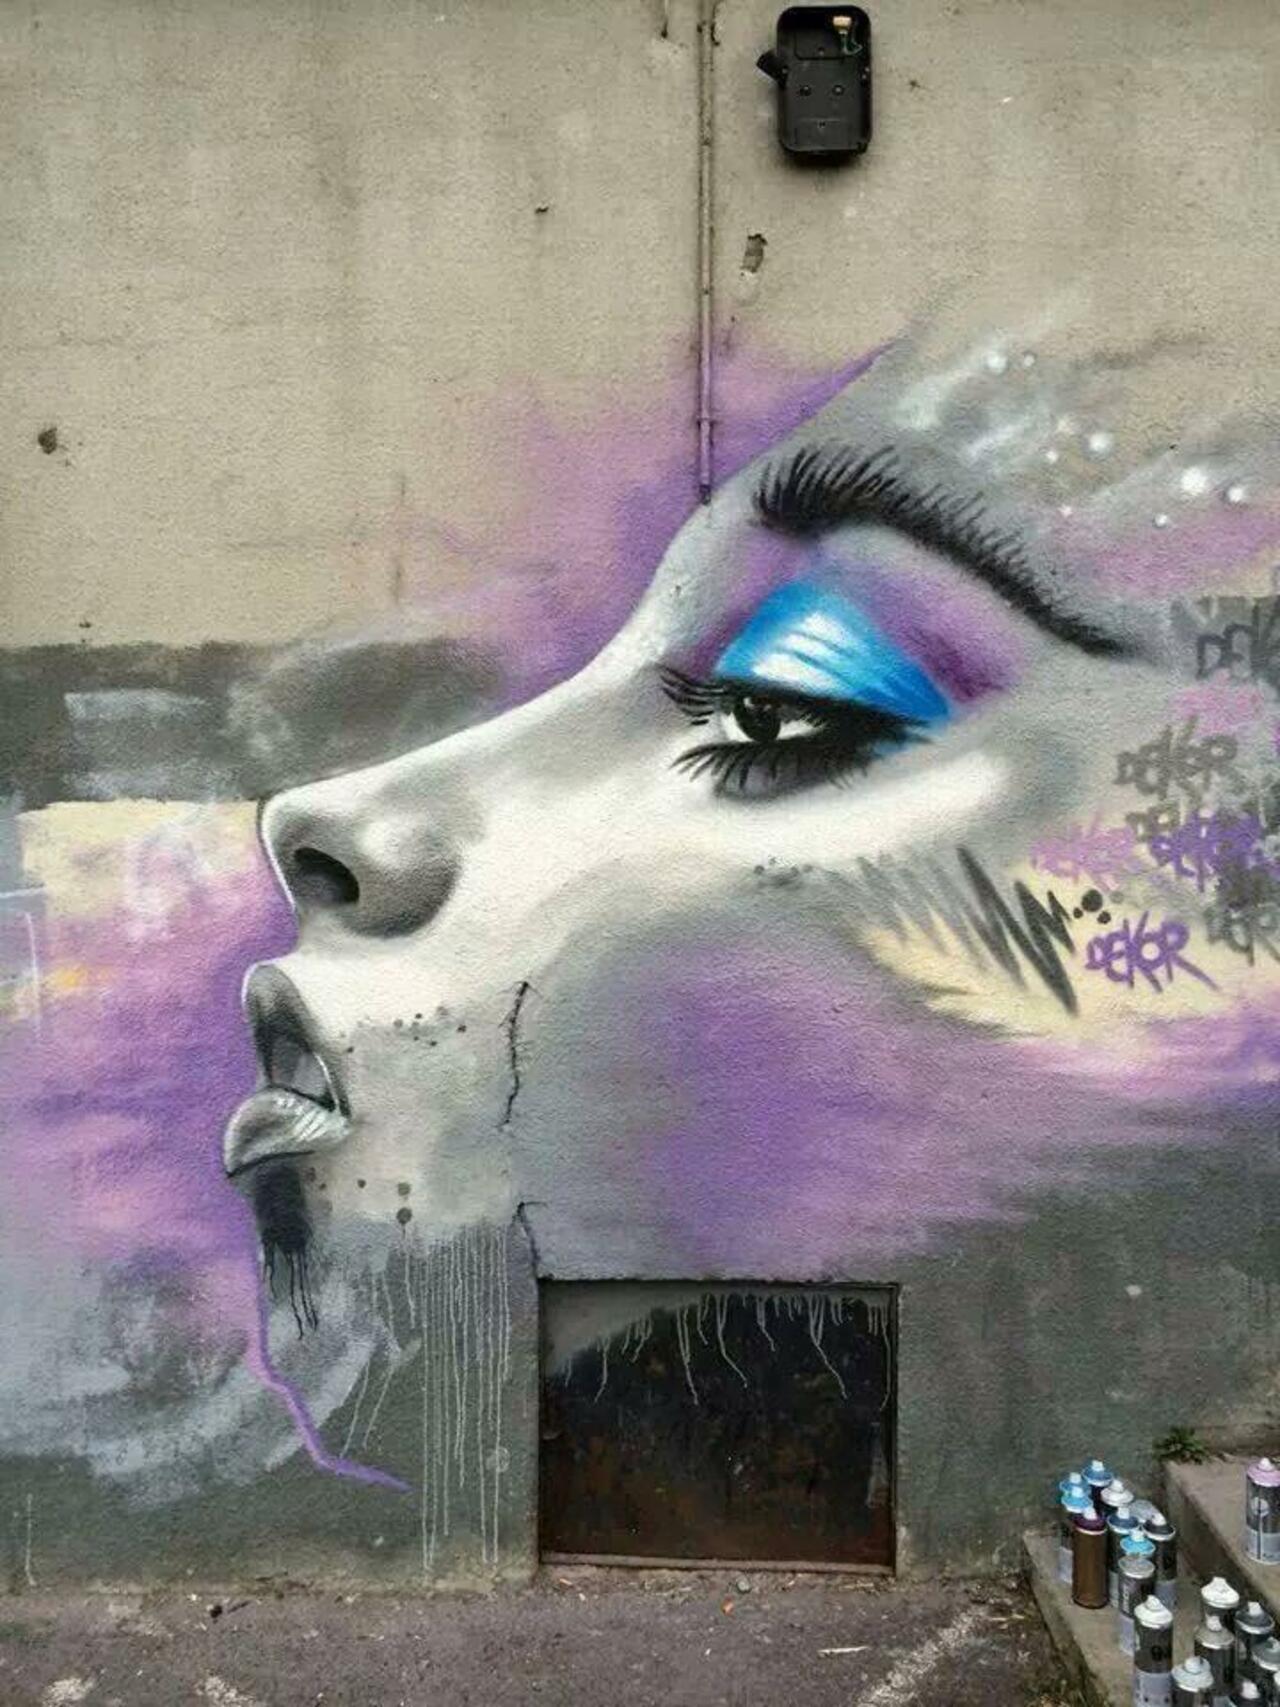 RT @DlgermanyDavid: "Portrait Styled Street Art by #Dekor France 

#art #graffiti #mural #streetart http://t.co/QAcf6i6w29” via @GoogleStreetArt RT